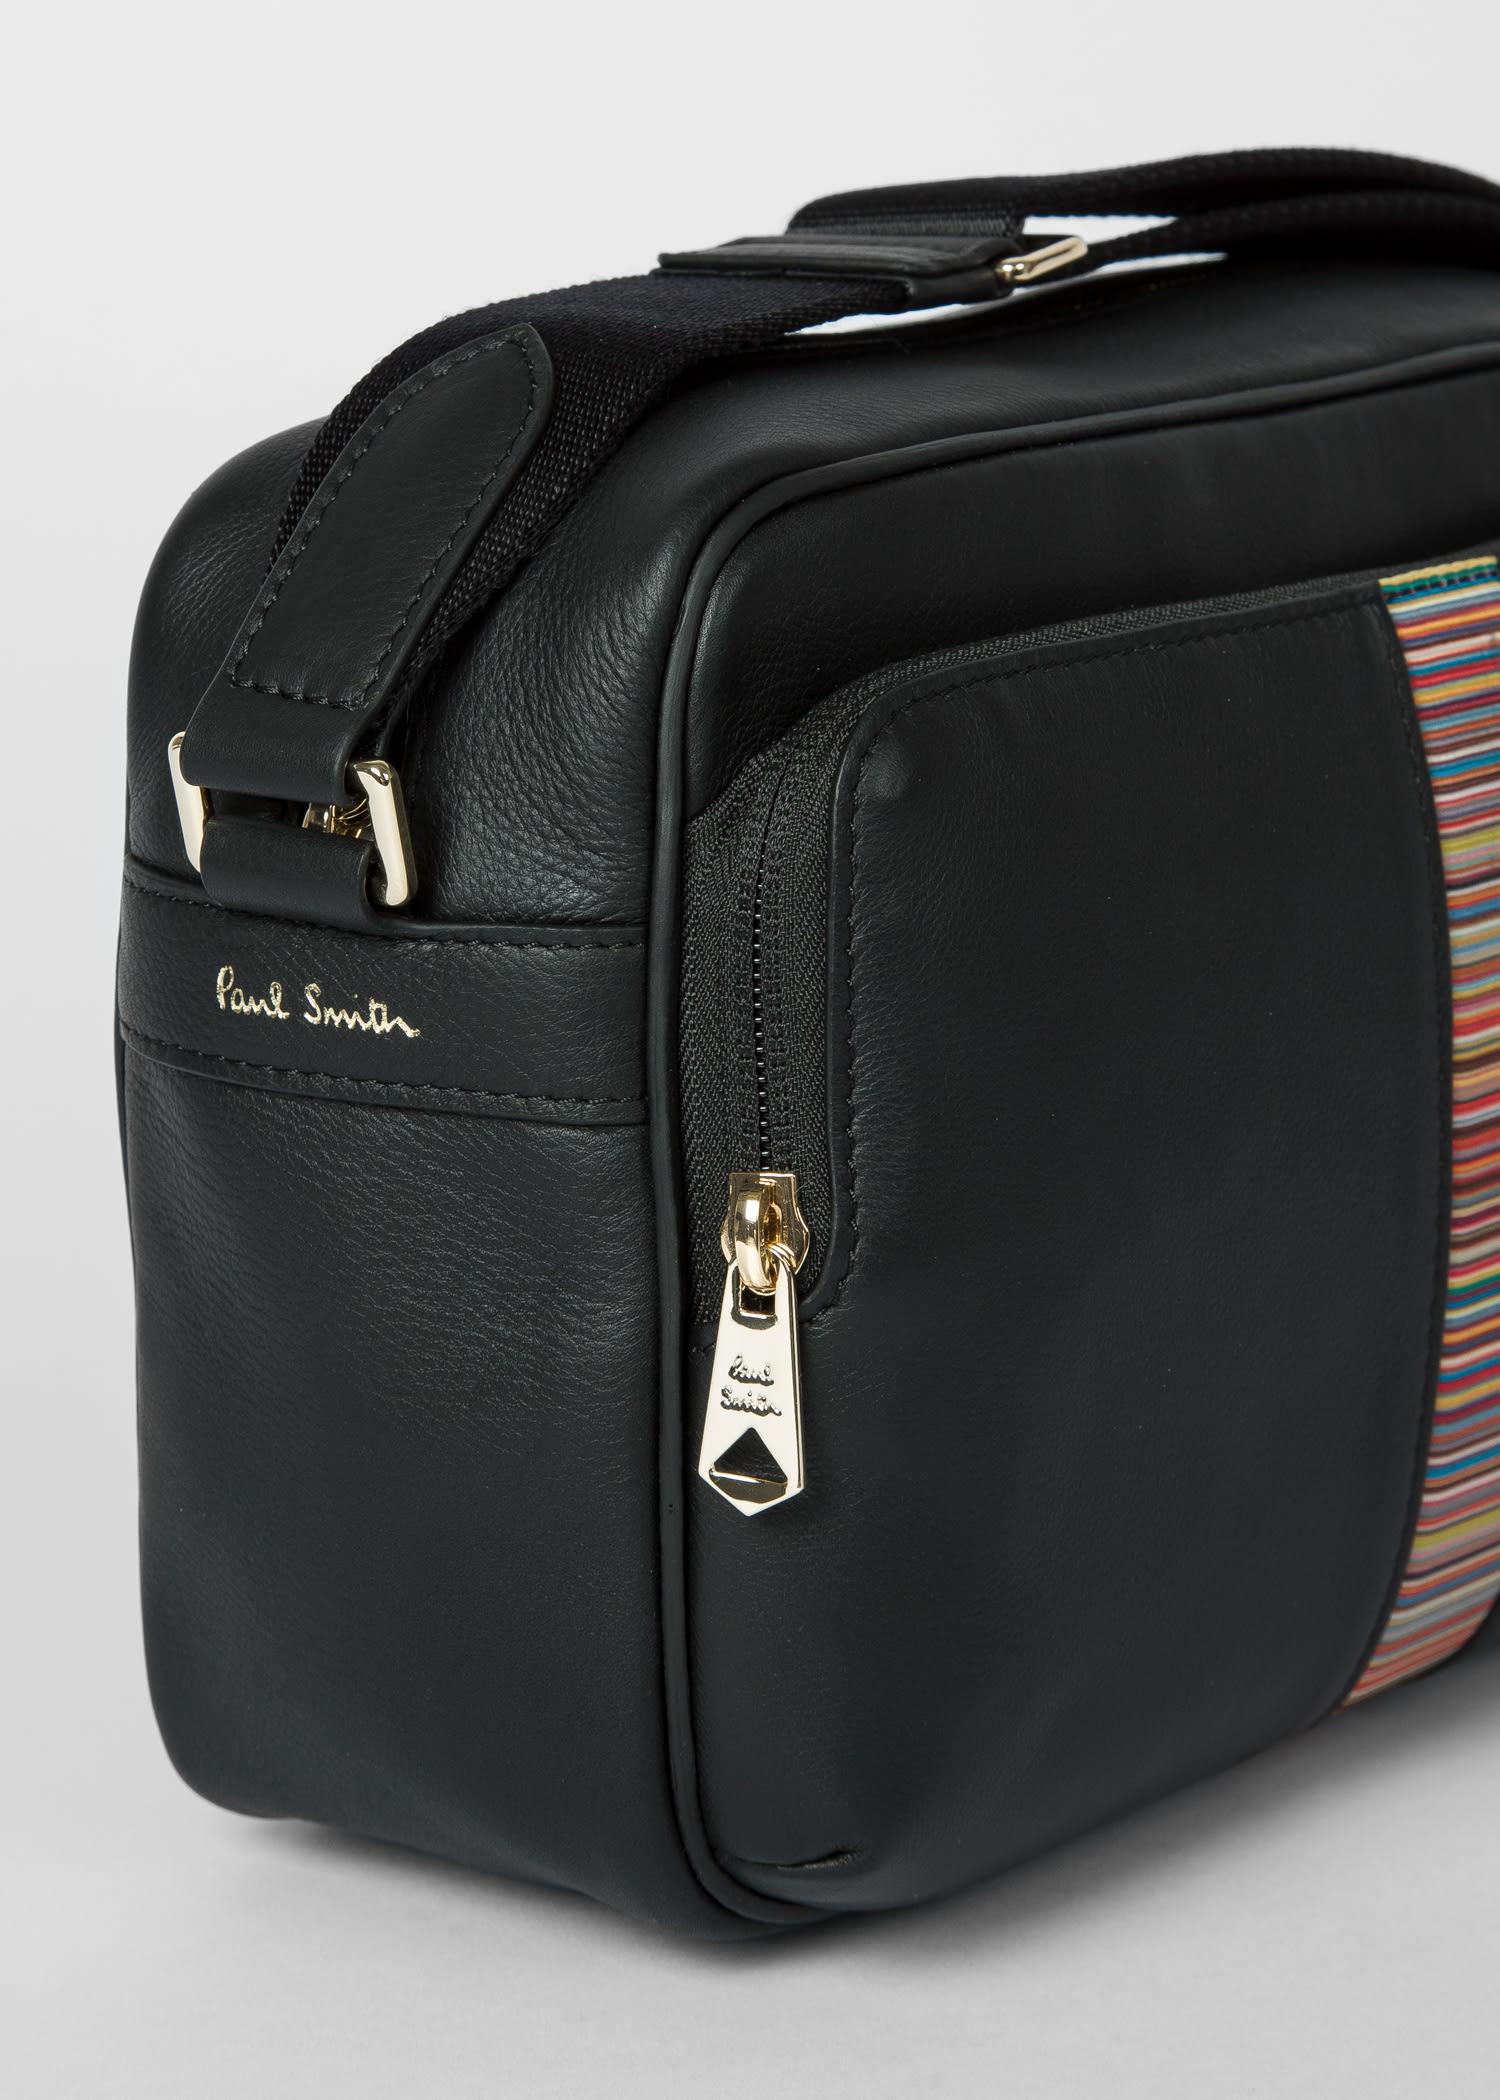 Paul Smith Black Leather 'signature Stripe' Cross-body Bag for Men - Lyst